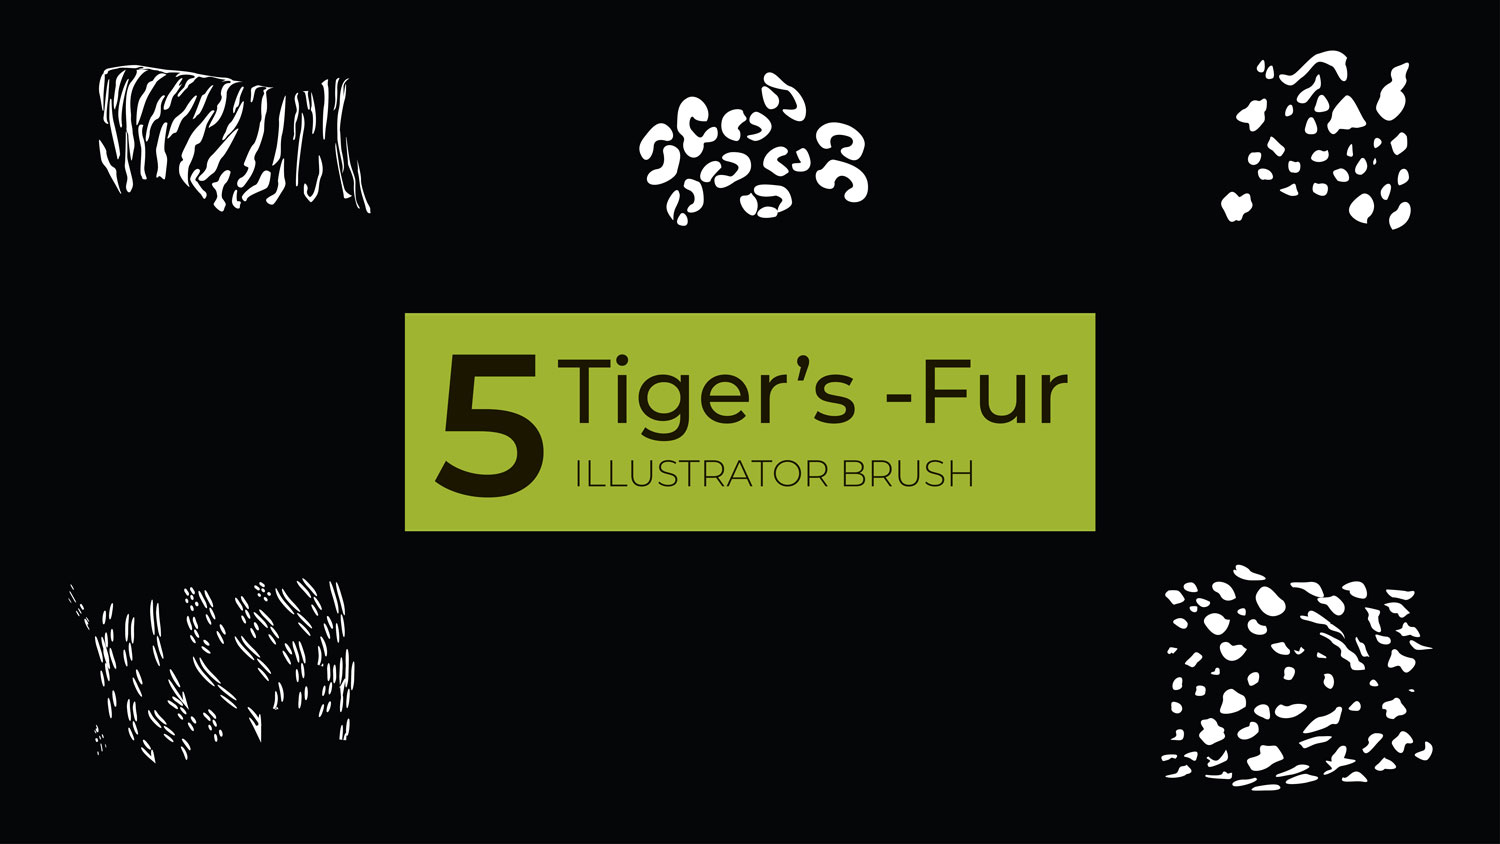 5 Adobe Illustrator Tiger Fur Brush Sets You Can Download For Free | Bisakhadatta Photography